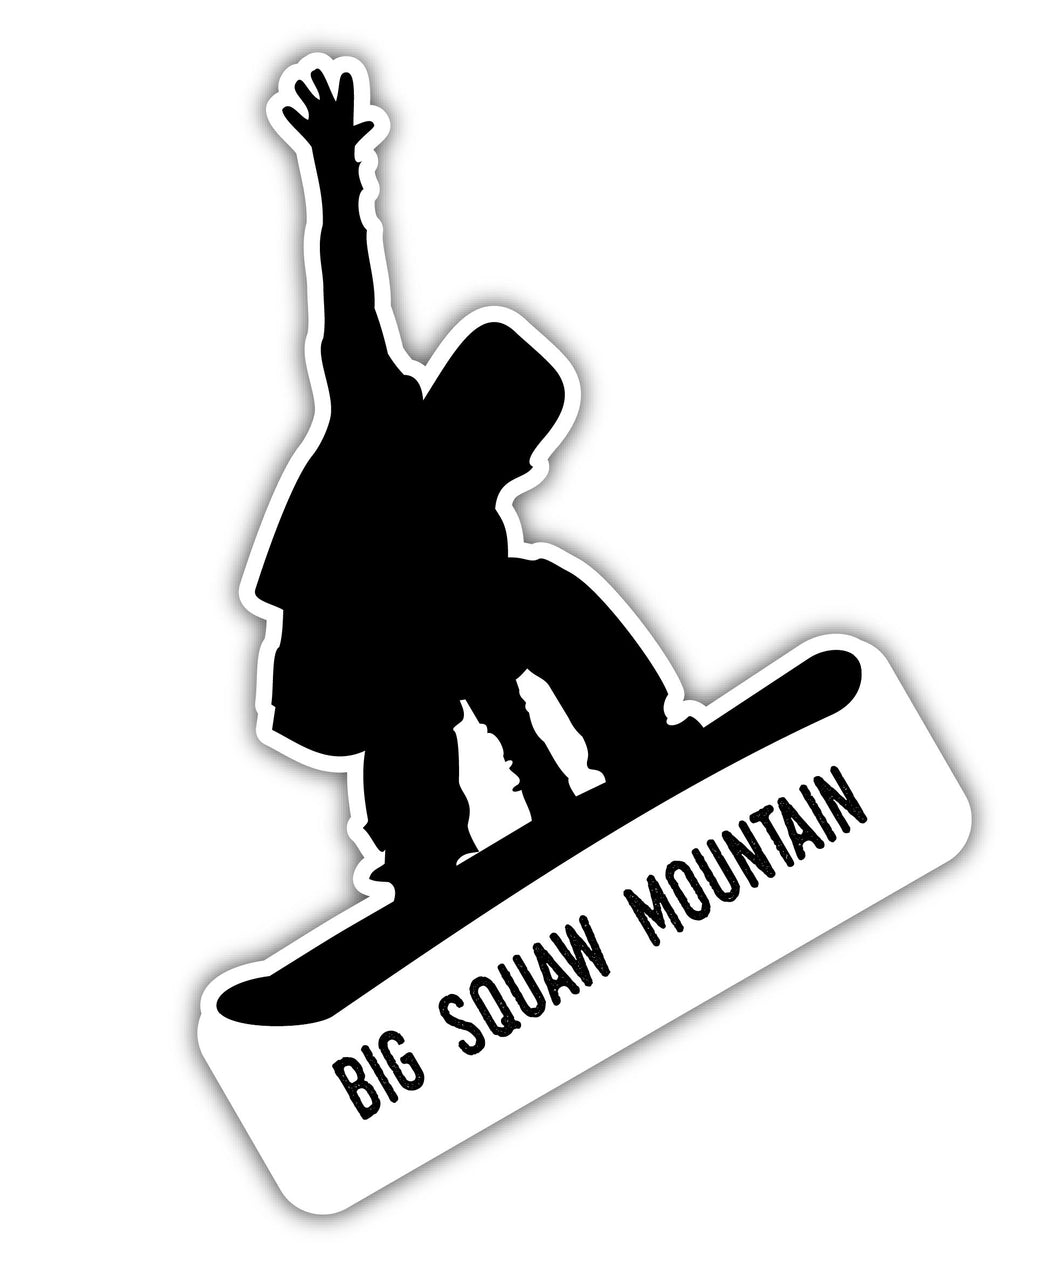 Big Squaw Mountain Maine Ski Adventures Souvenir Approximately 5 x 2.5-Inch Vinyl Decal Sticker Goggle Design